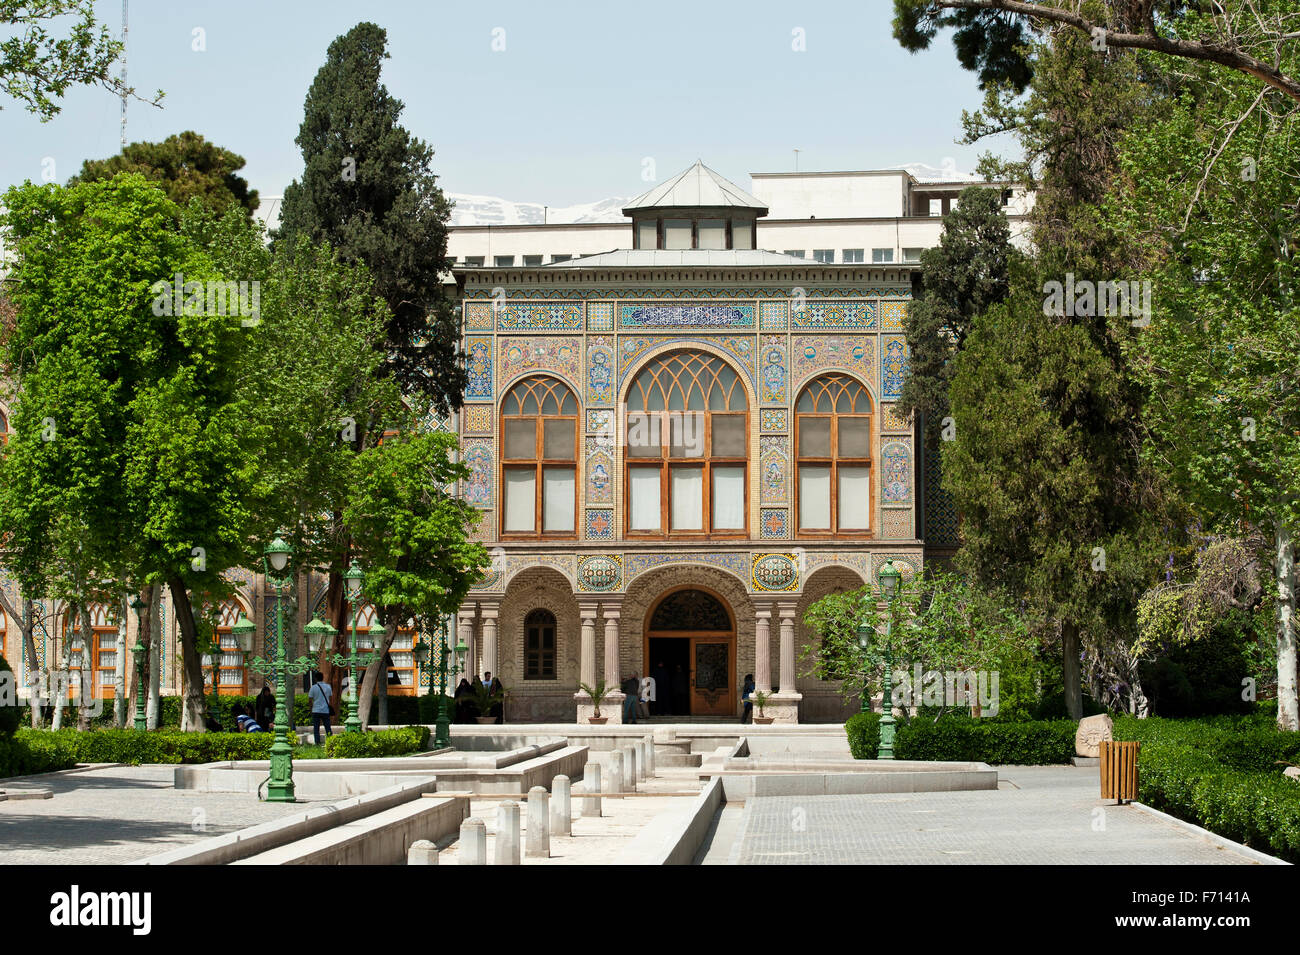 Entrée de l'hôtel de Salam, Talar e Salam, le Golestan Palace, Téhéran, Iran Banque D'Images